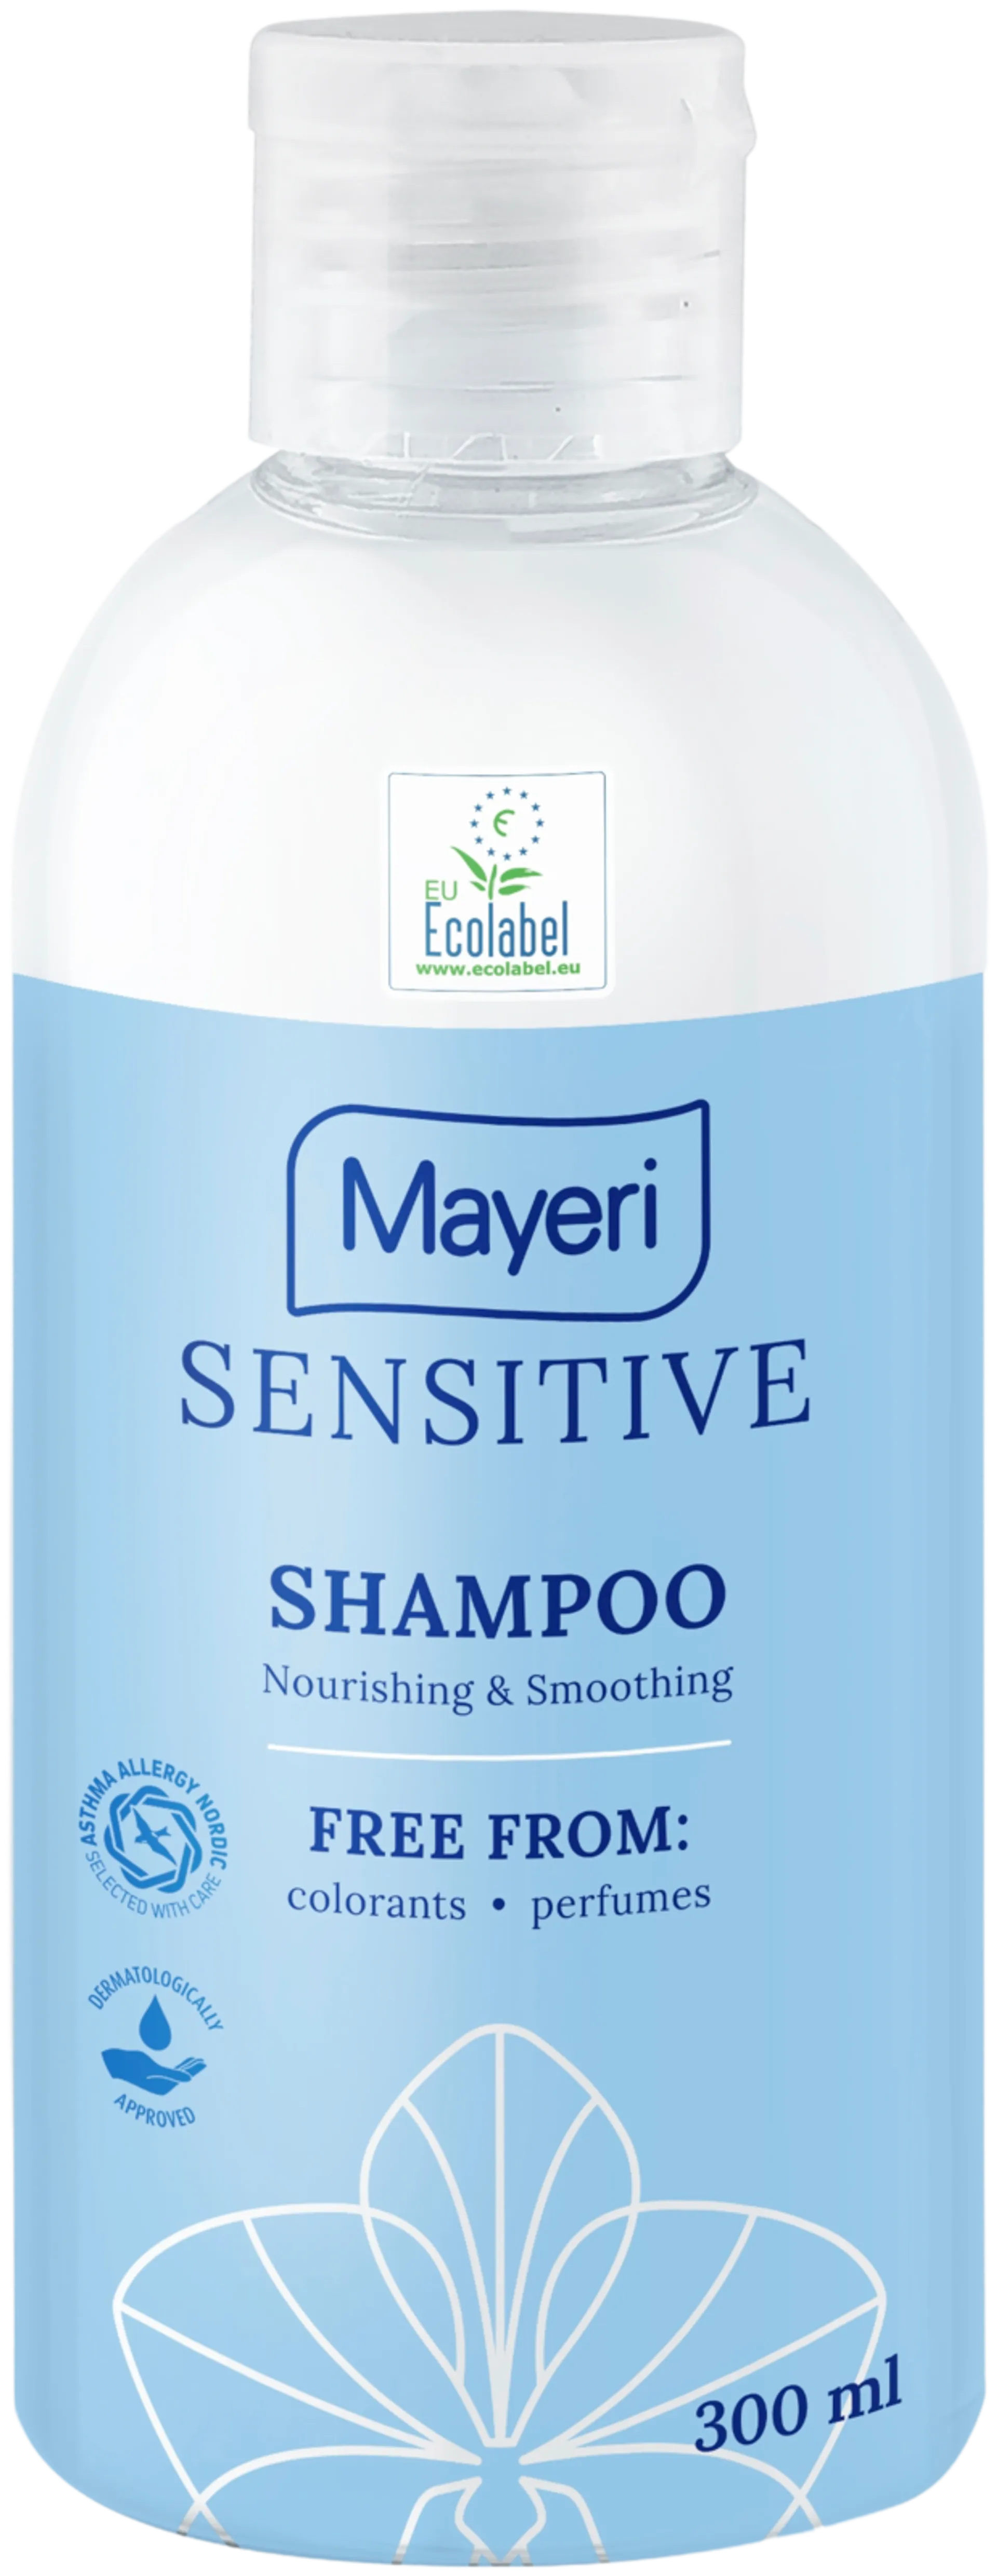 Mayeri Sensitive shampoo 300ml pullo